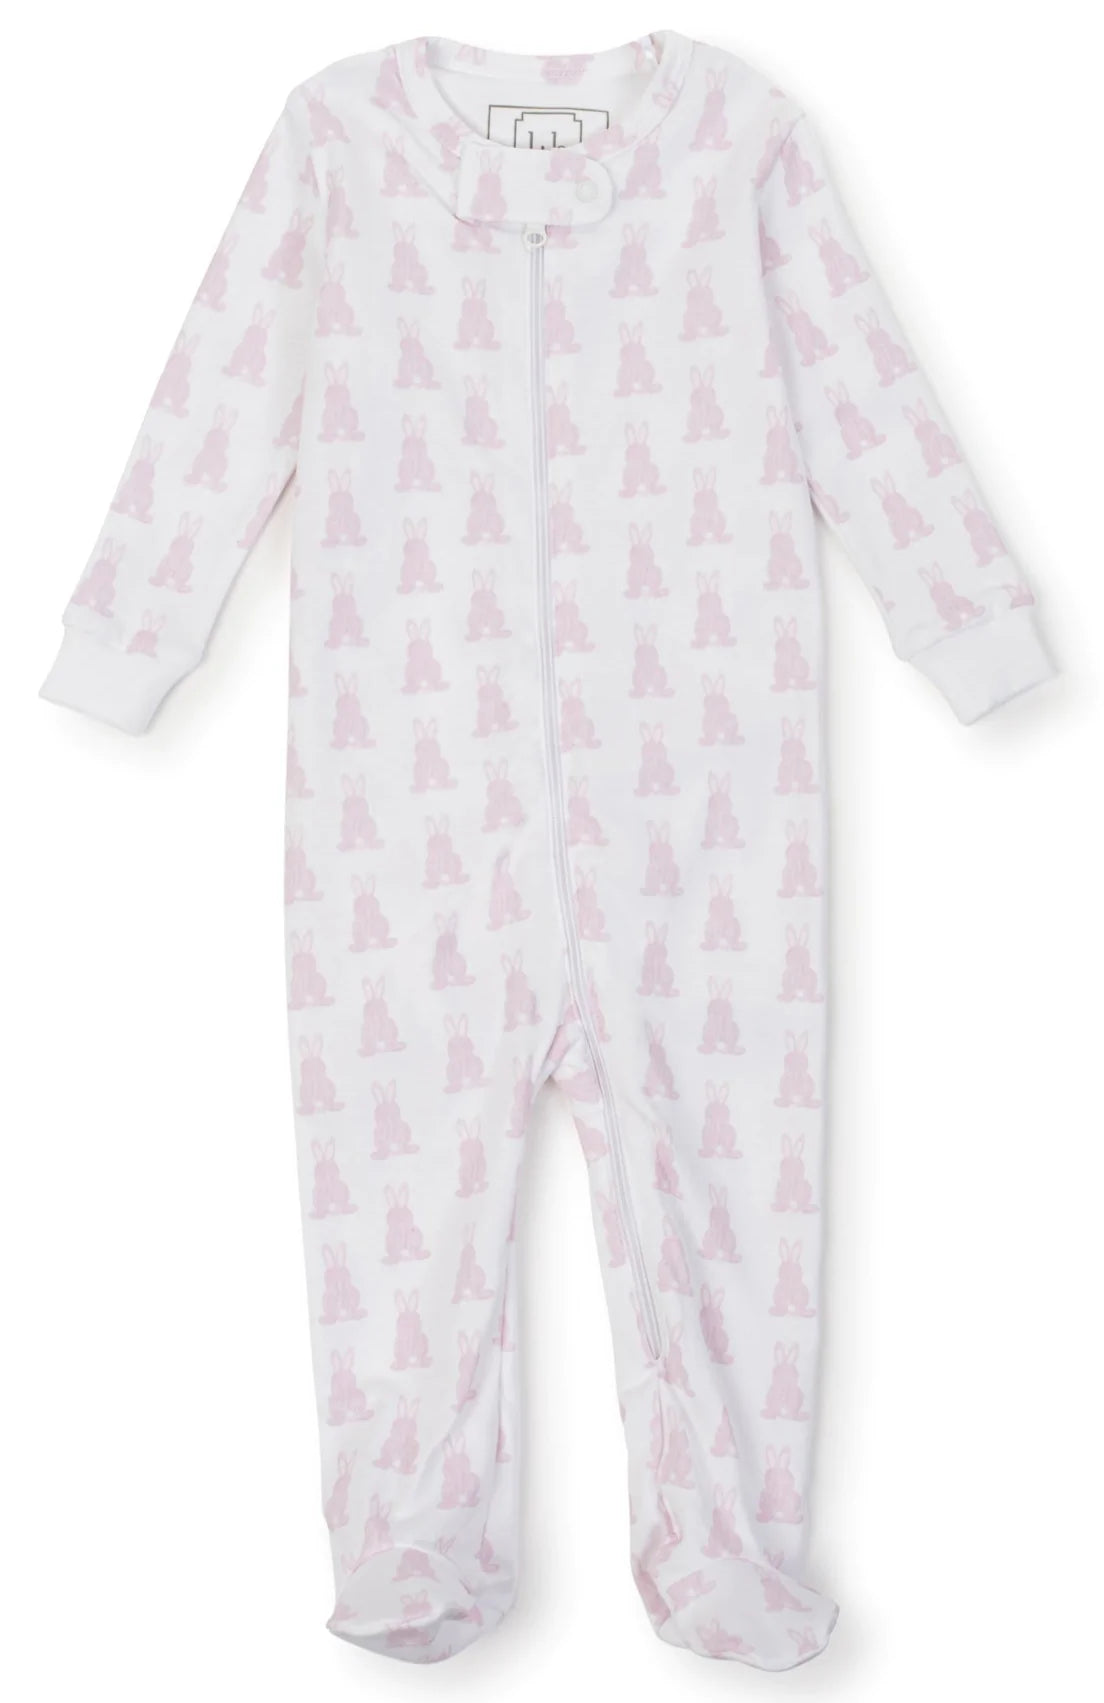 Parker Zipper Pajama - Bunny Tails Pink - Breckenridge Baby